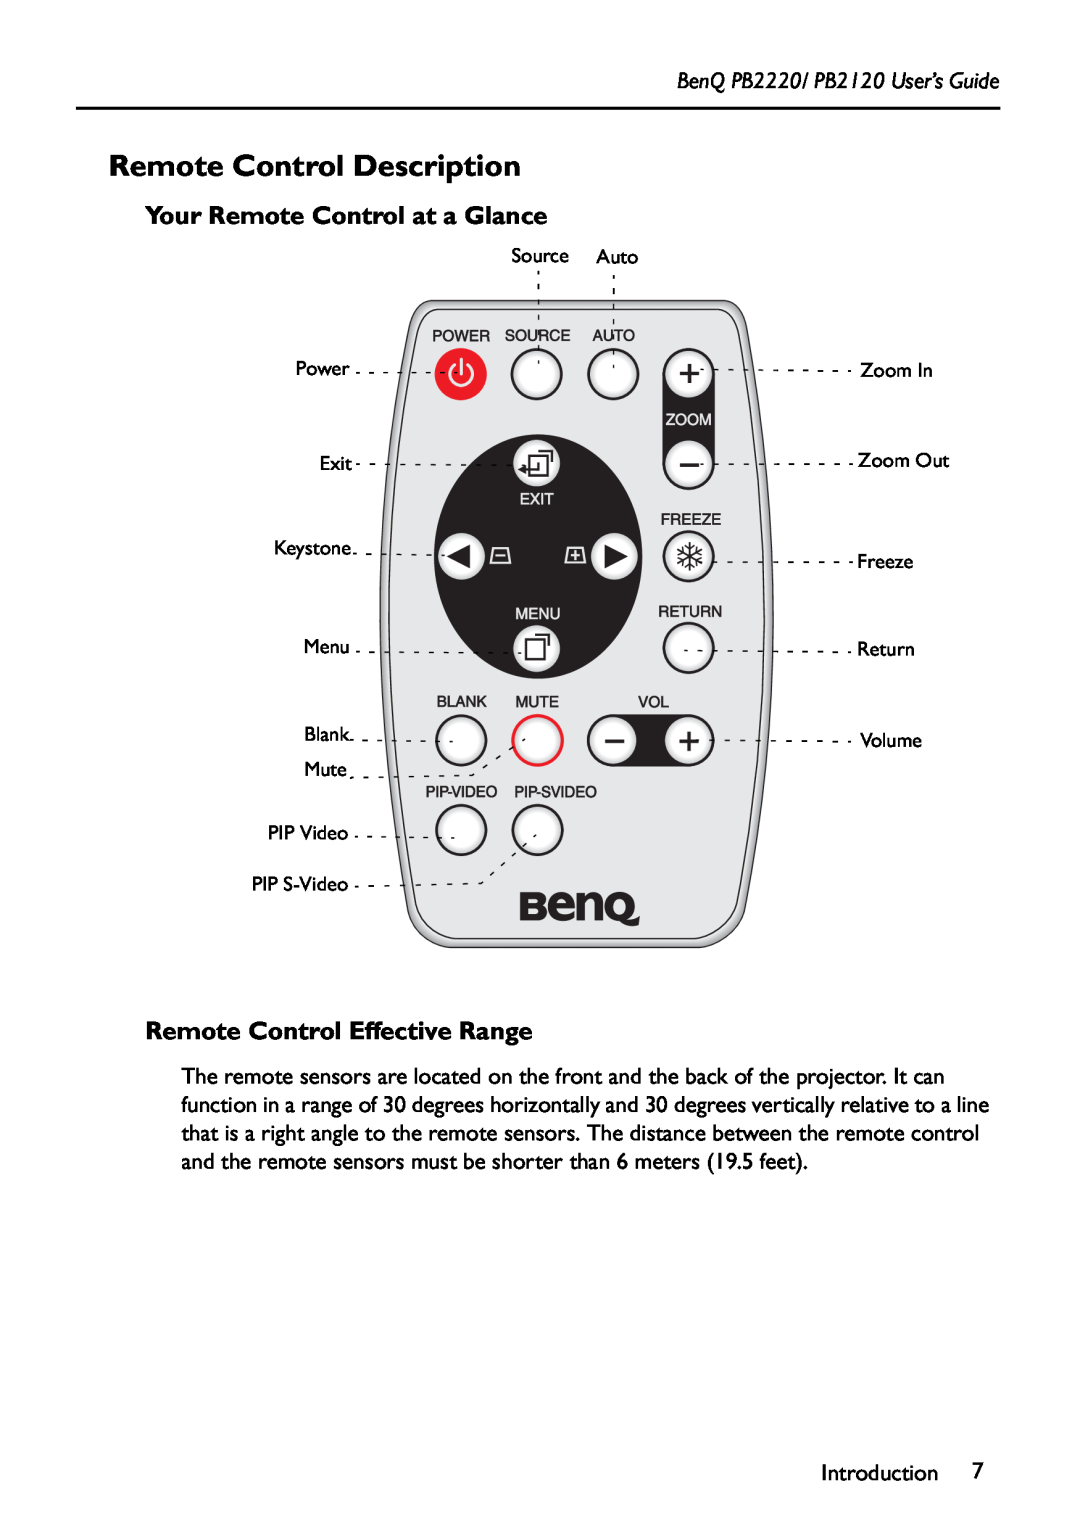 BenQ PB2220 manual Remote Control Description, Your Remote Control at a Glance, Remote Control Effective Range 